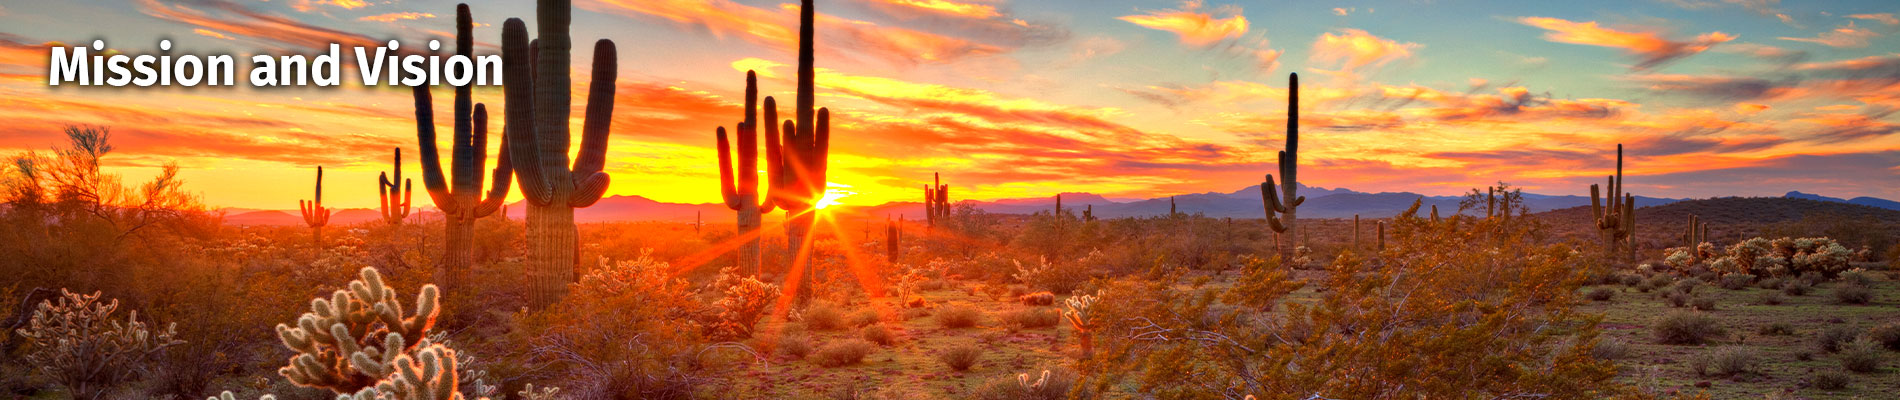 Beautiful desert scenery of the sunset and cactus